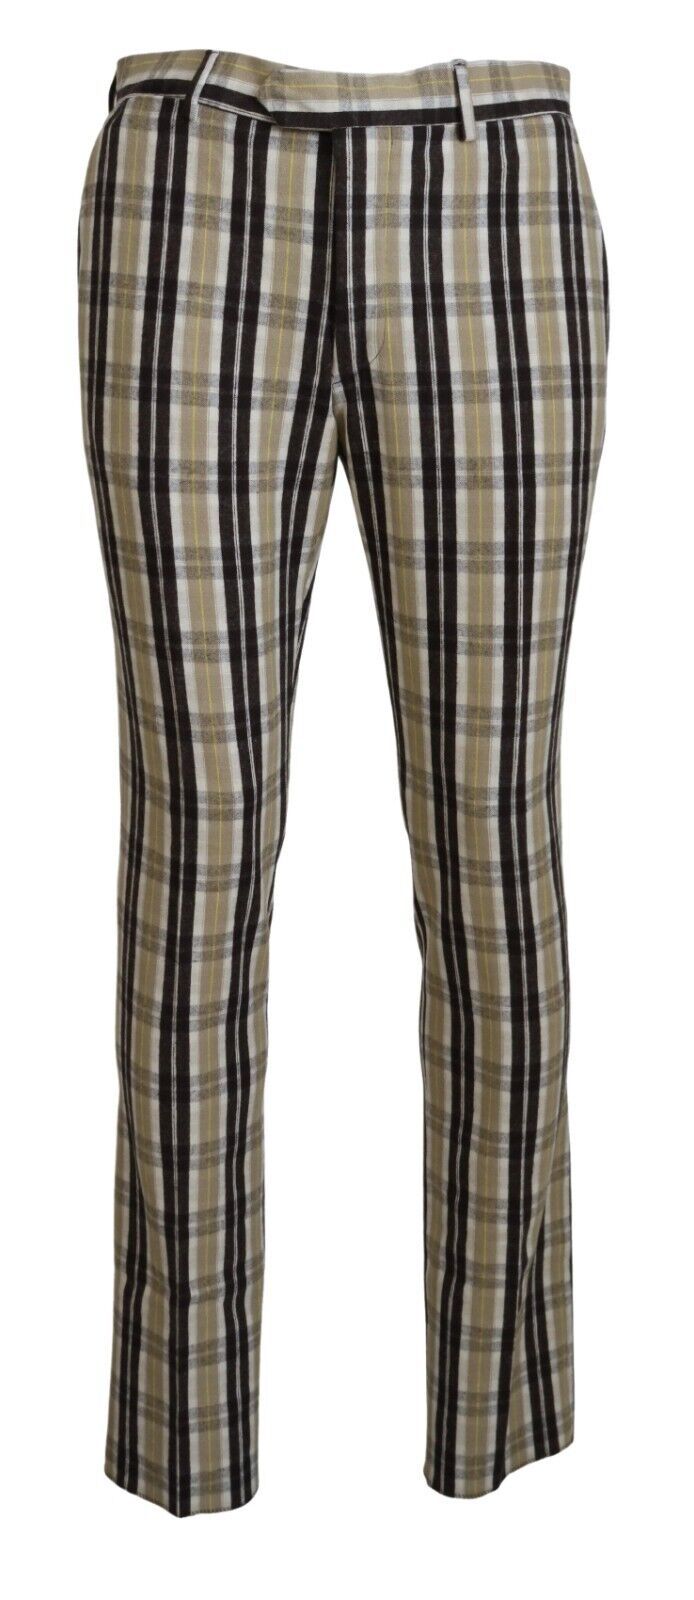 BENCIVENGA Chic Multicolor Checkered Cotton Pants